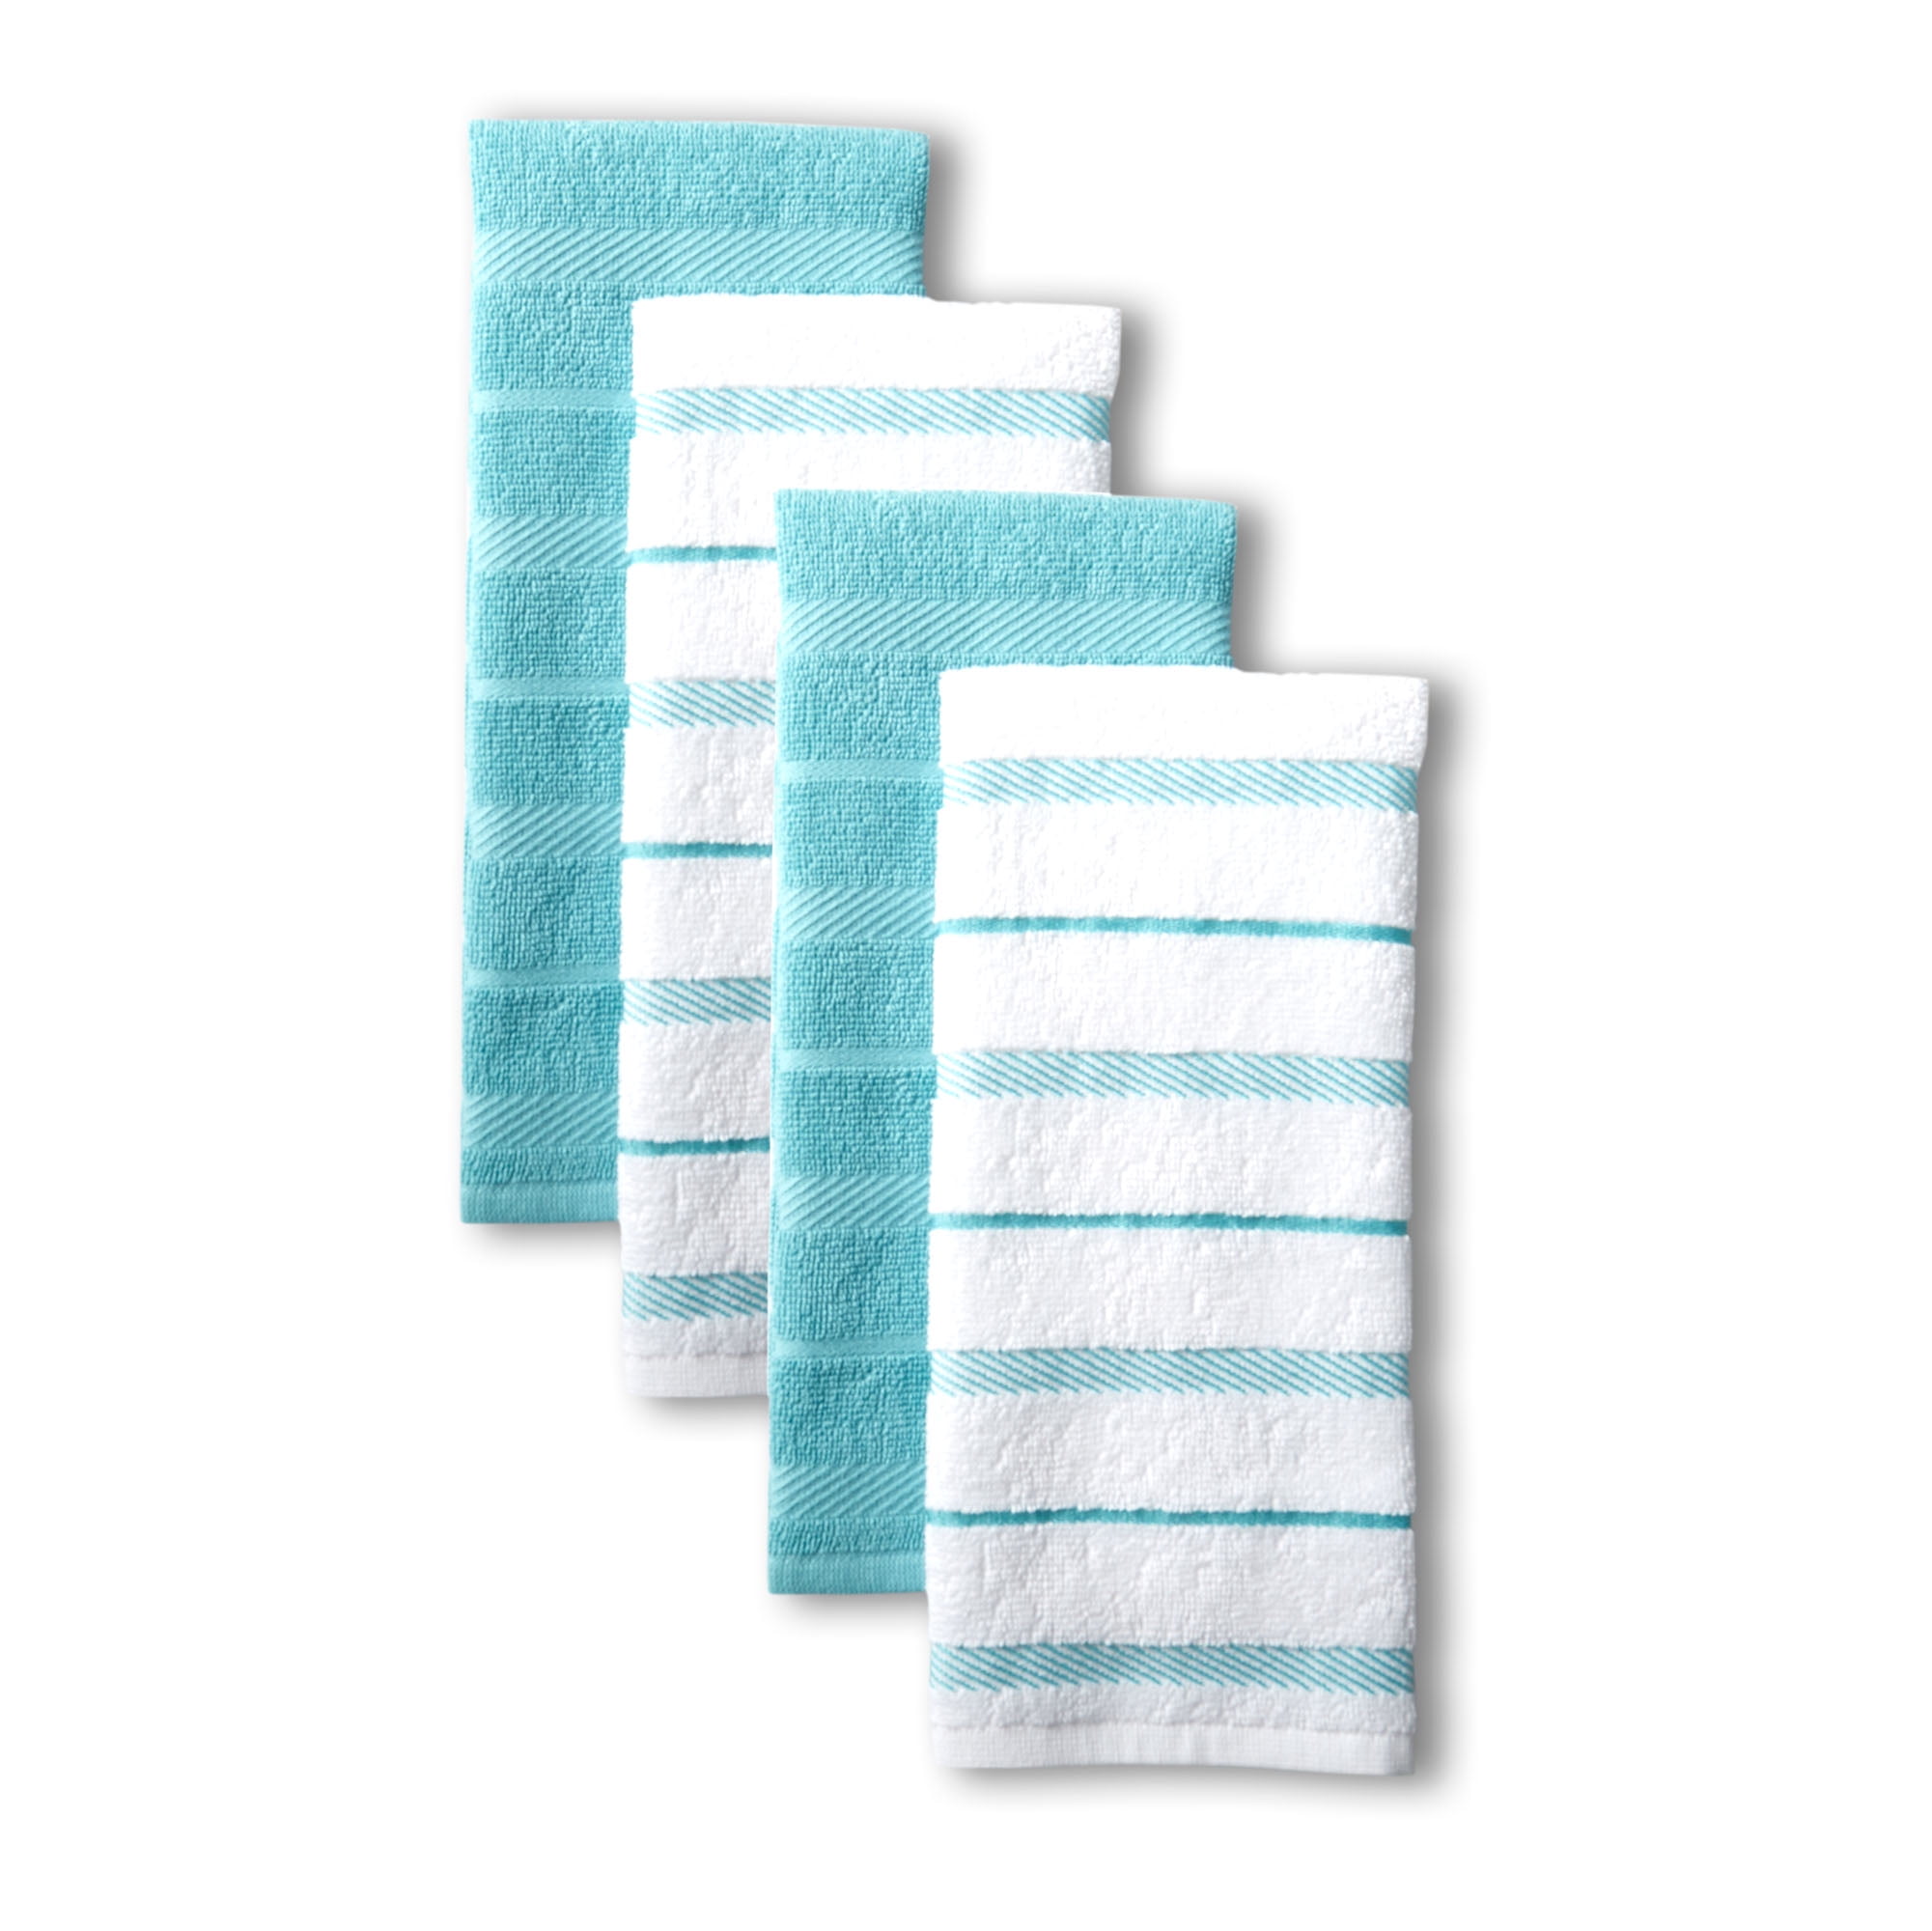 CUISINART KITCHEN TOWELS (3) TURQUOISE WHITE CHECK STRIPE 16 X 28